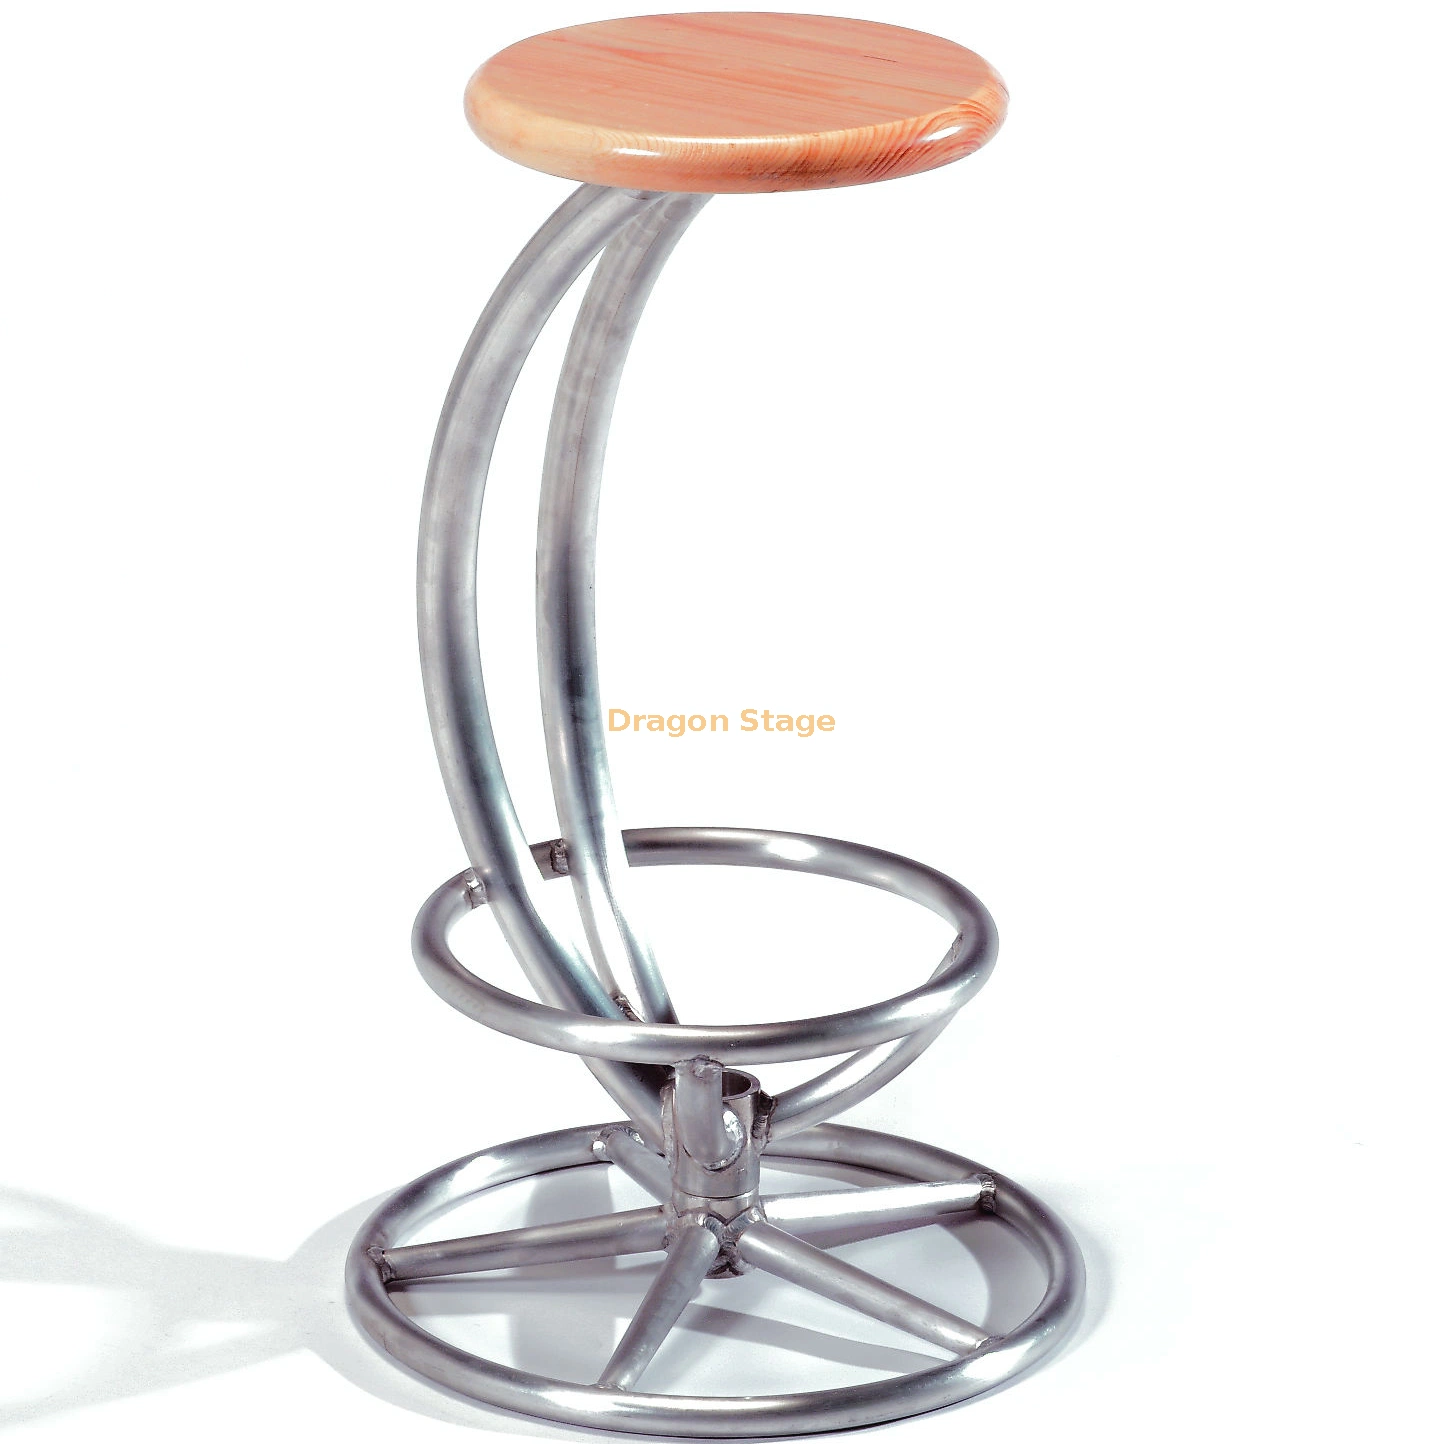 Dragonstage Aluminum Truss Chair Table Wooden Deck Portable Bar Furniture Bar Chair